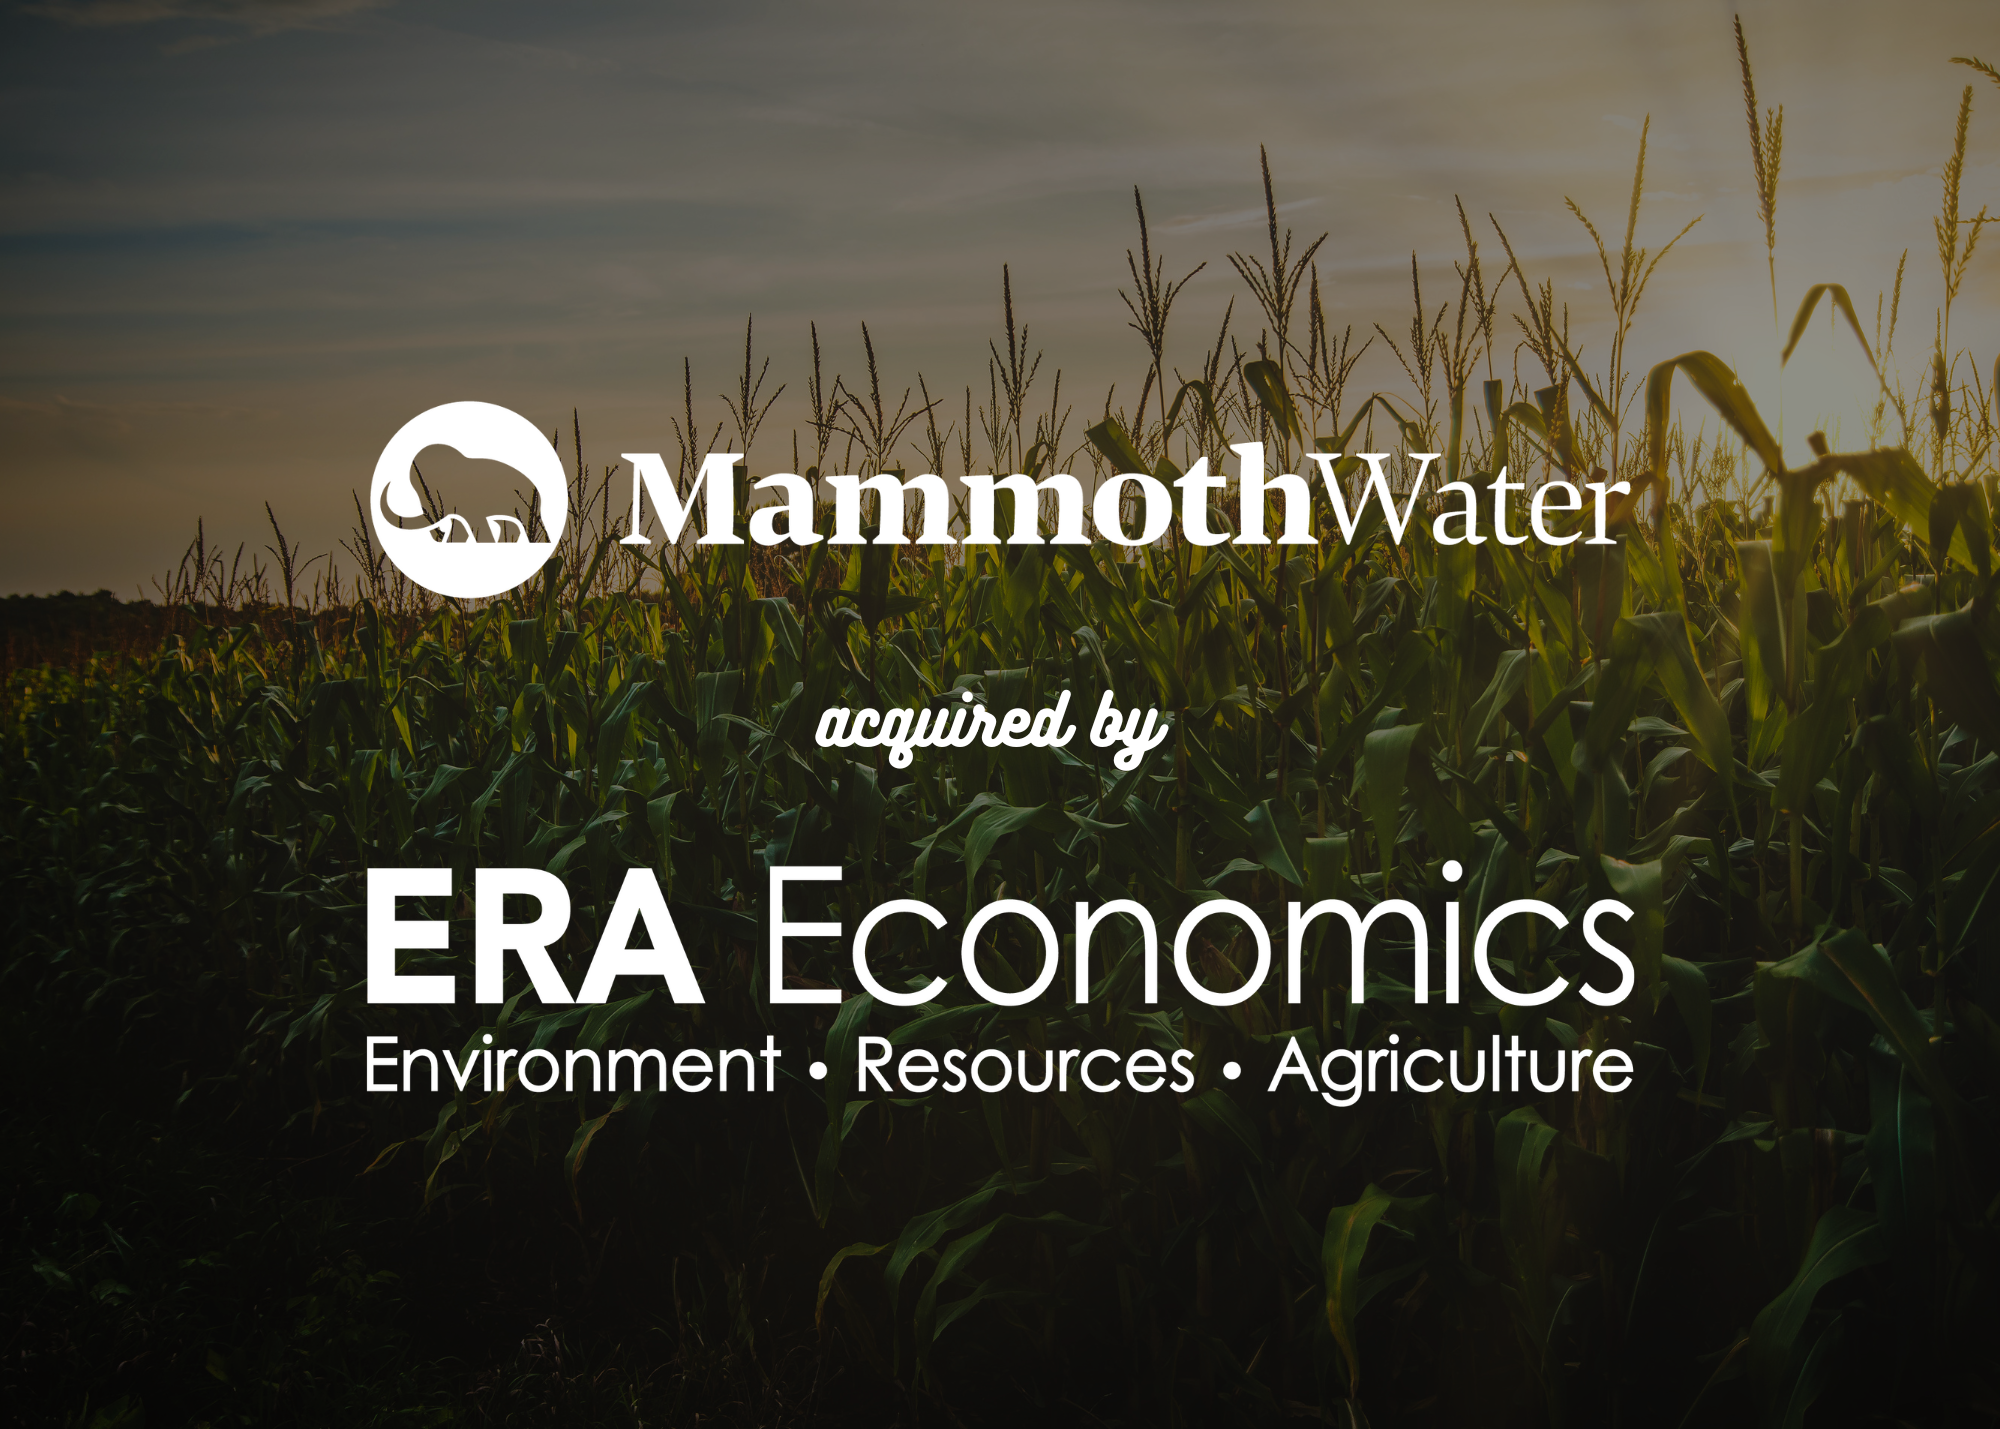 Mammoth Water acquired by ERA Economics